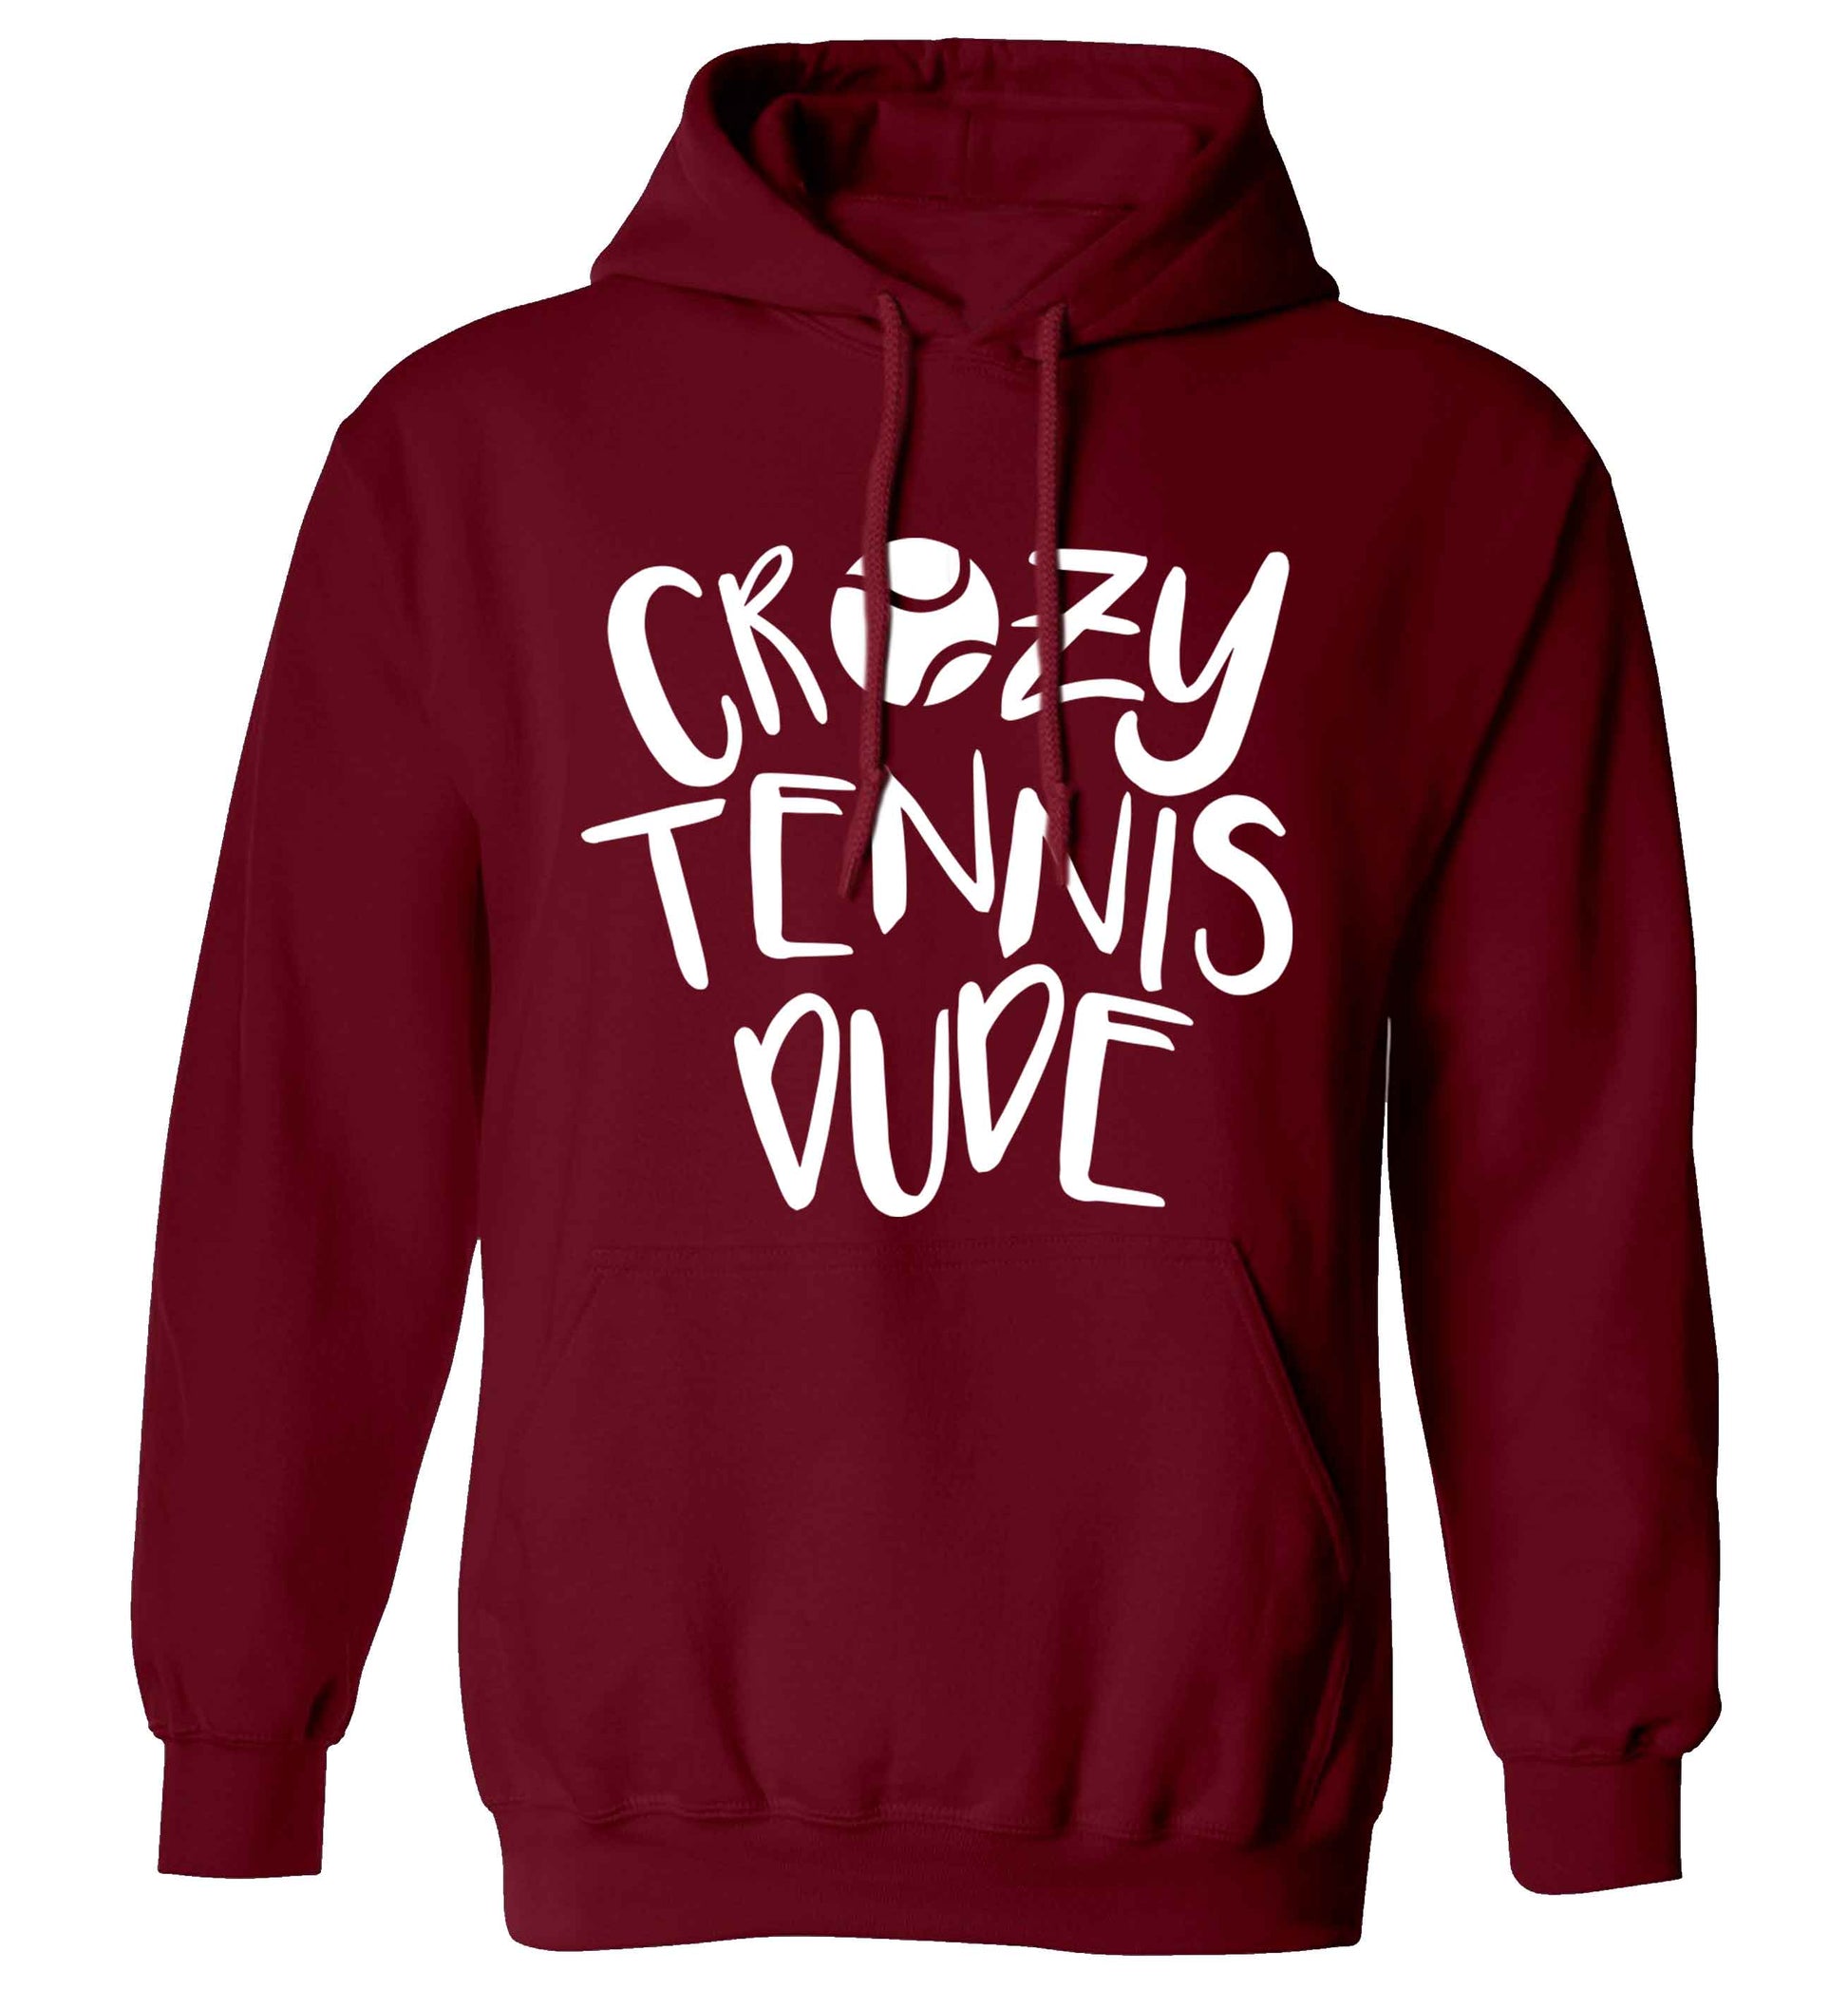 Crazy tennis dude adults unisex maroon hoodie 2XL